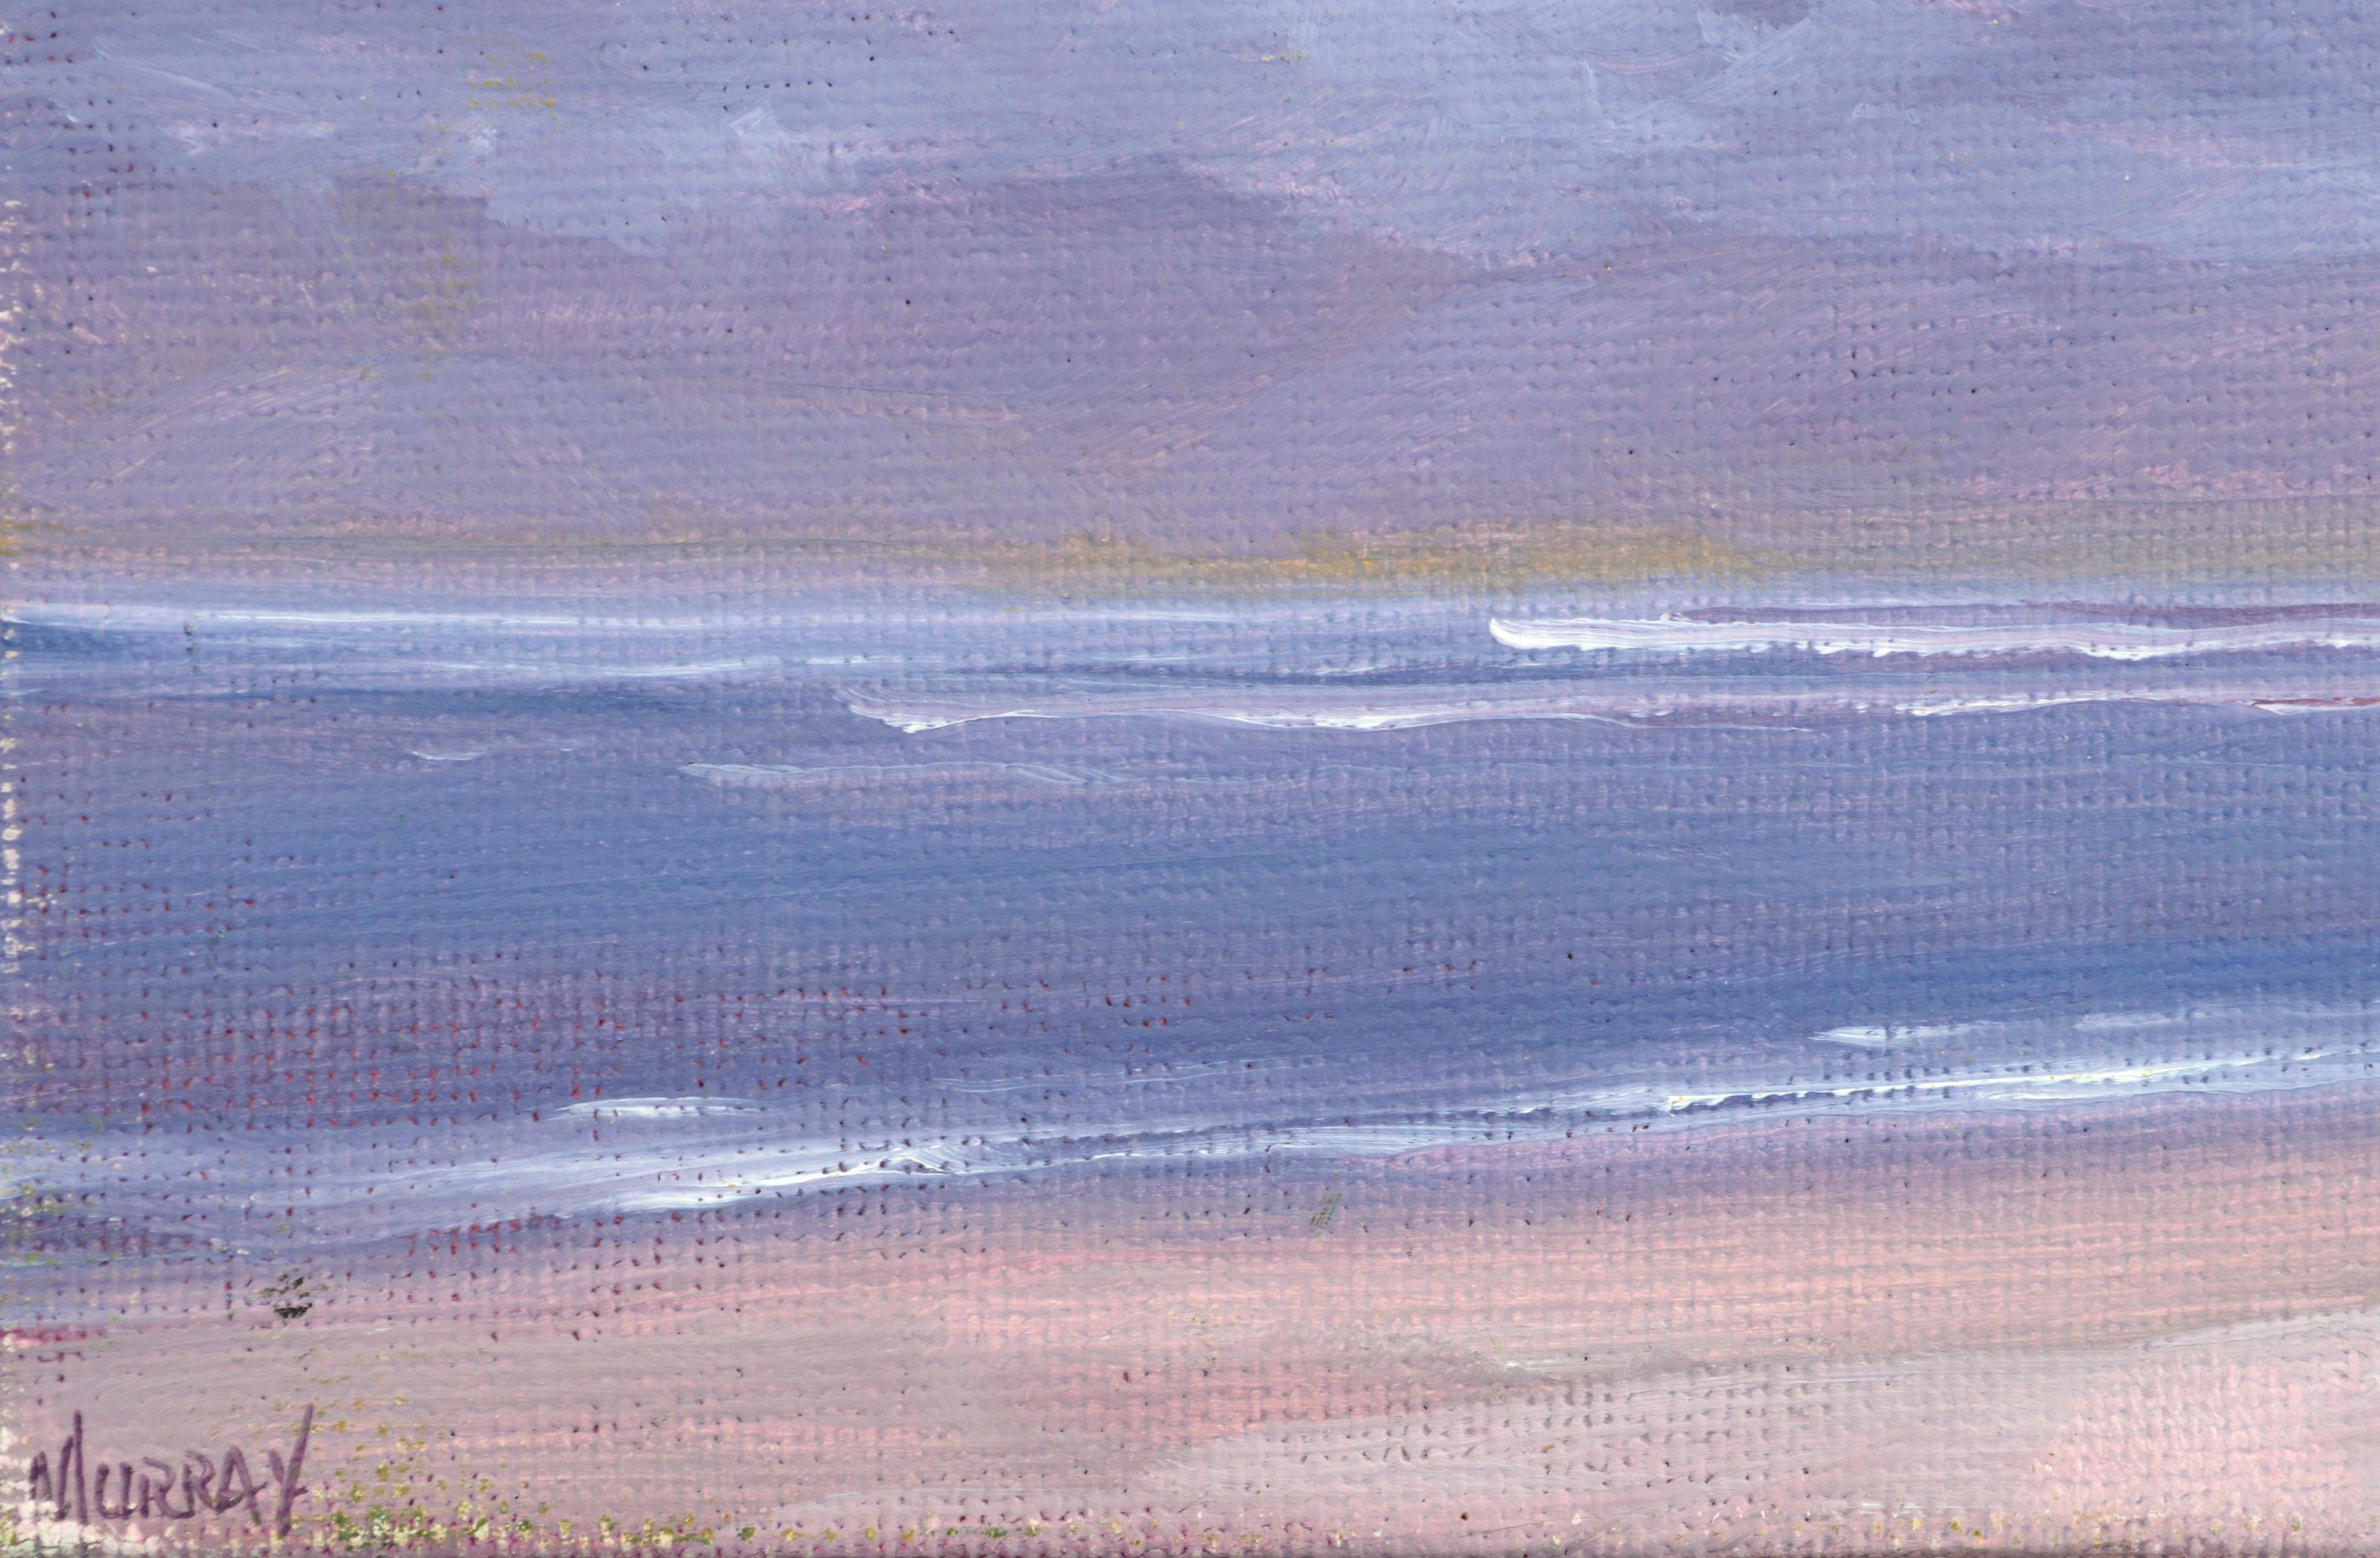 Miniature serene purple-hued seascape by Kathleen Murray (American, b. 1958). Signed 